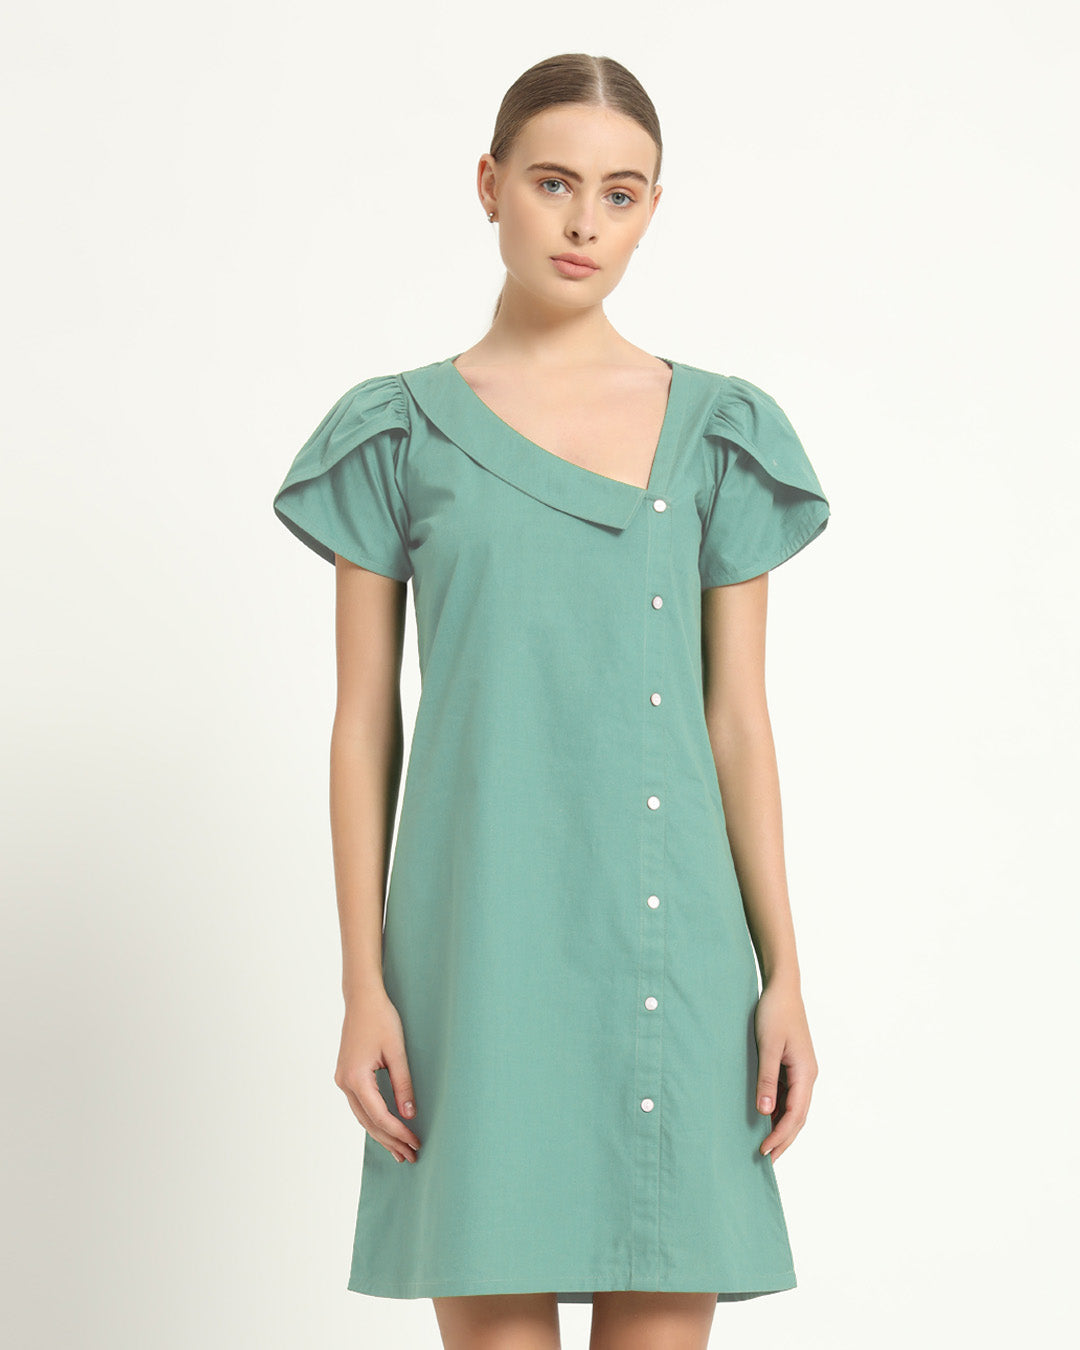 The Krensdorf Mint Cotton Dress